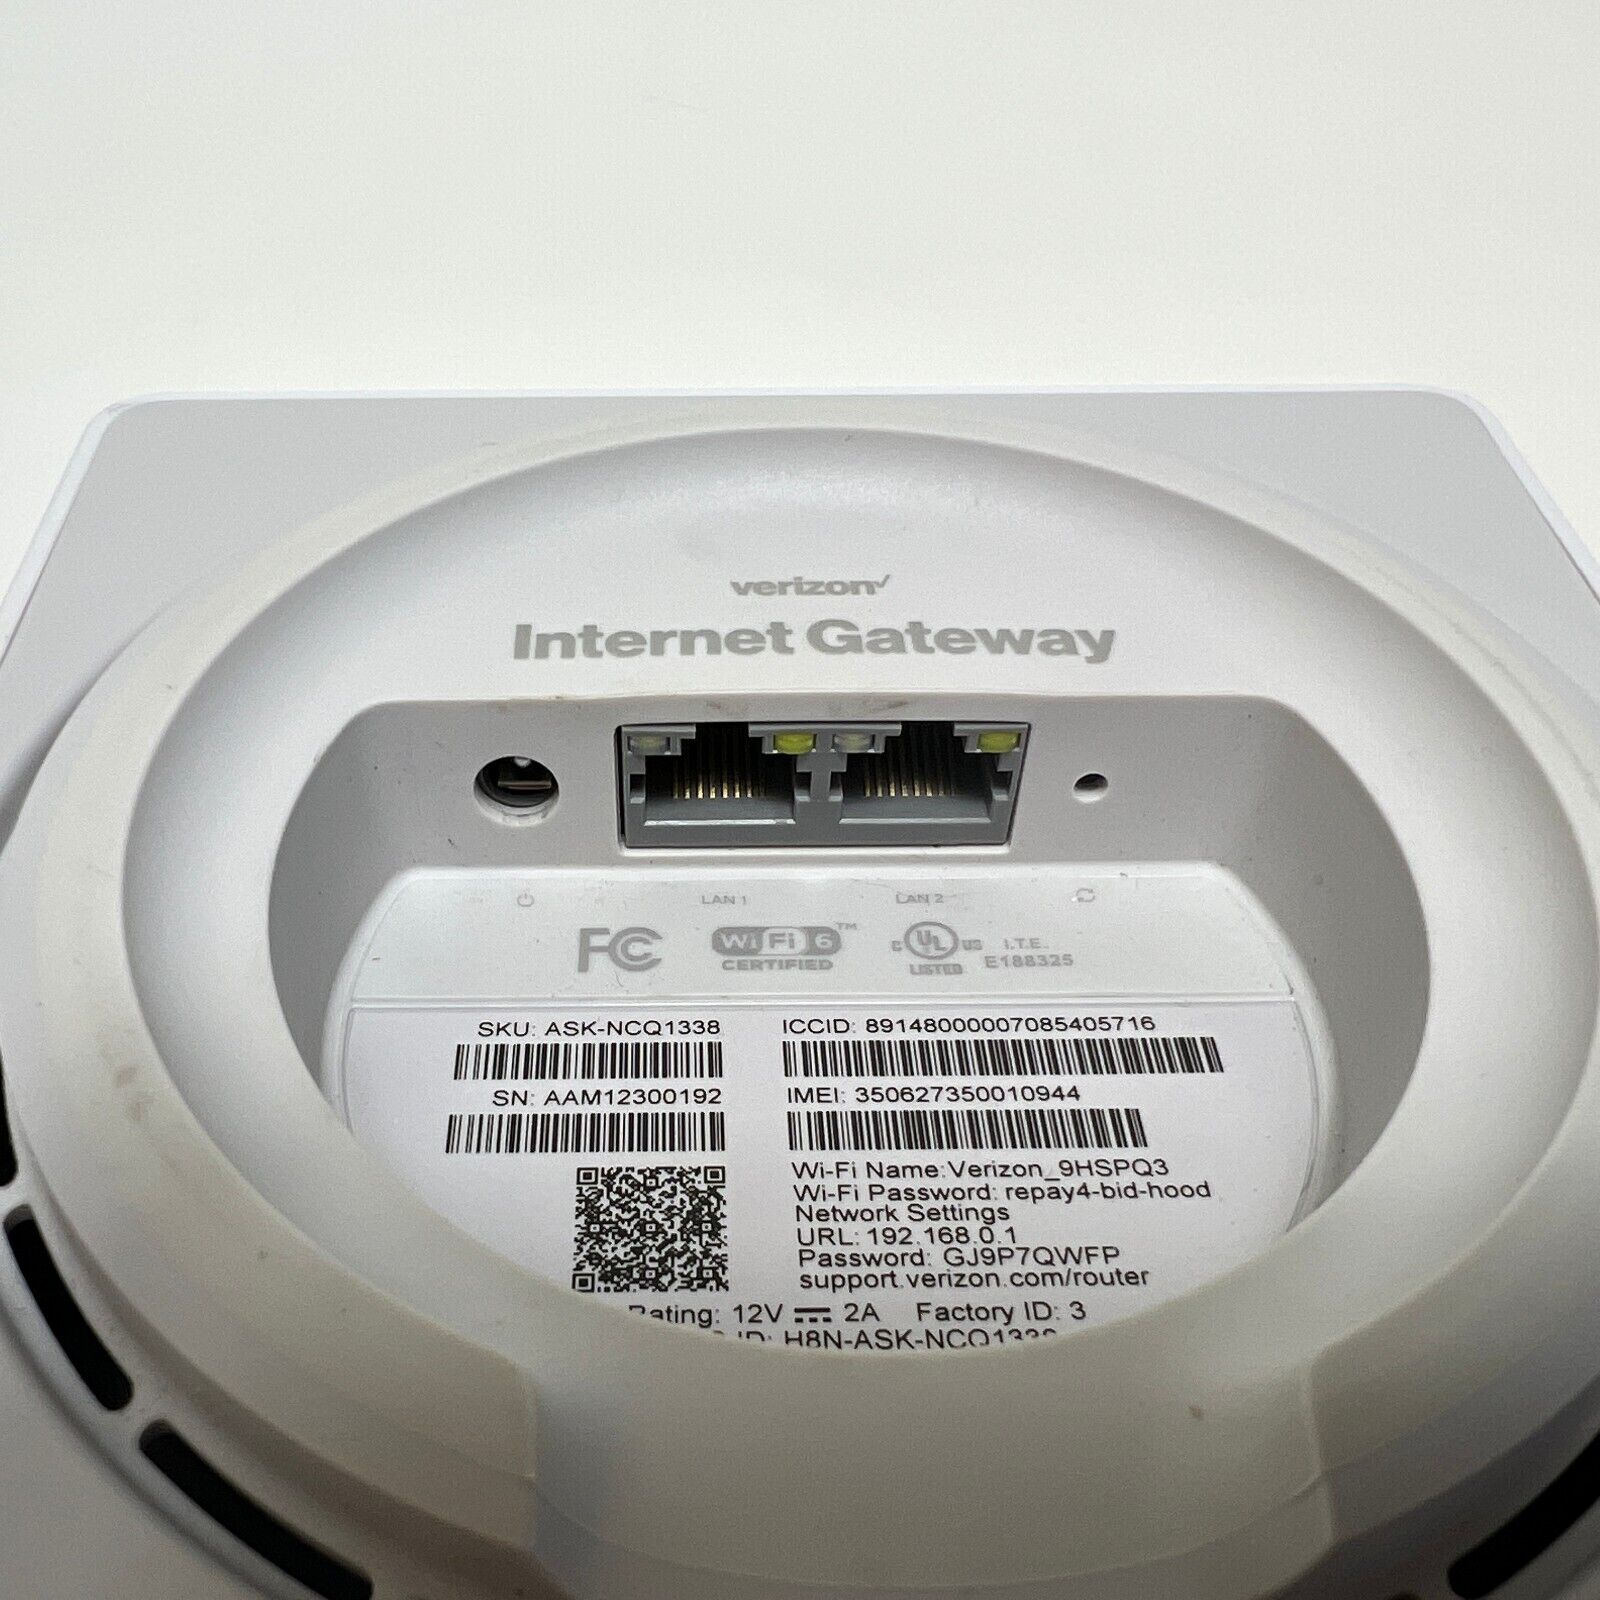 Verizon 5G Internet Gateway (ASK-NCQ1338/FA/E) Optimization Guide - Waveform